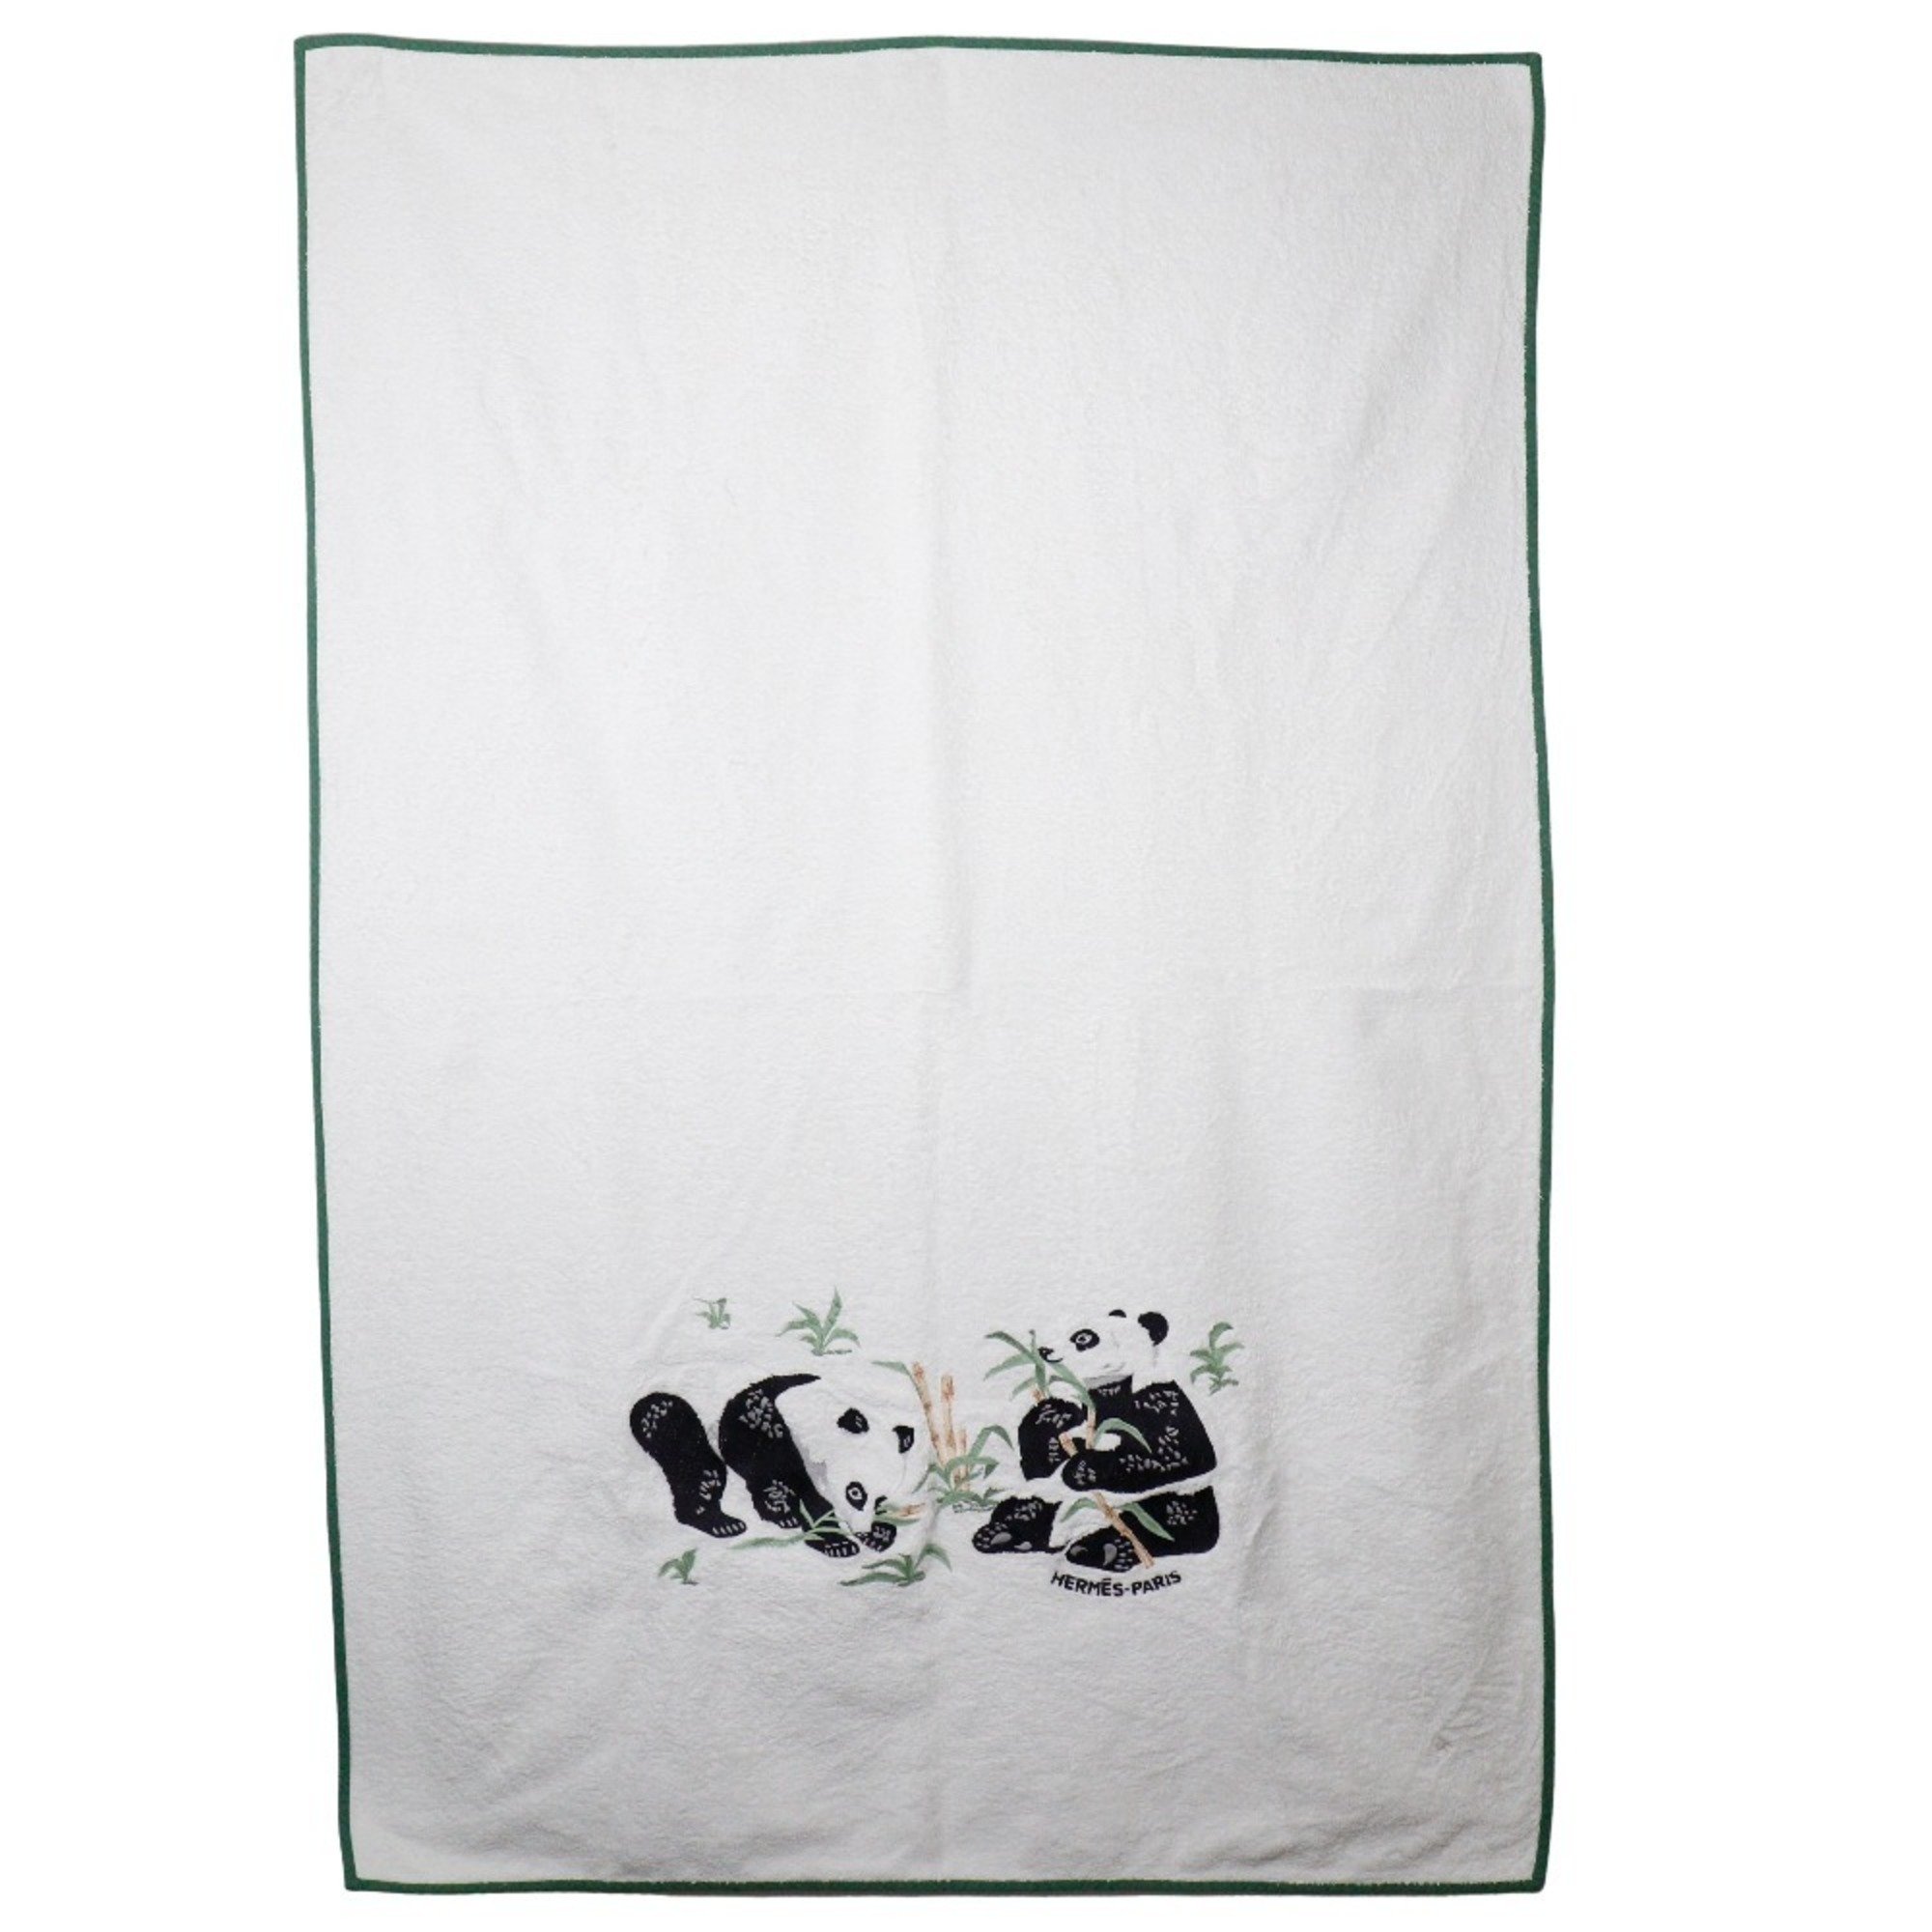 Hermes HERMES Beach Towel Set Miscellaneous Bird Panda Blanket Cotton White/Blue of 2 Towels Unisex